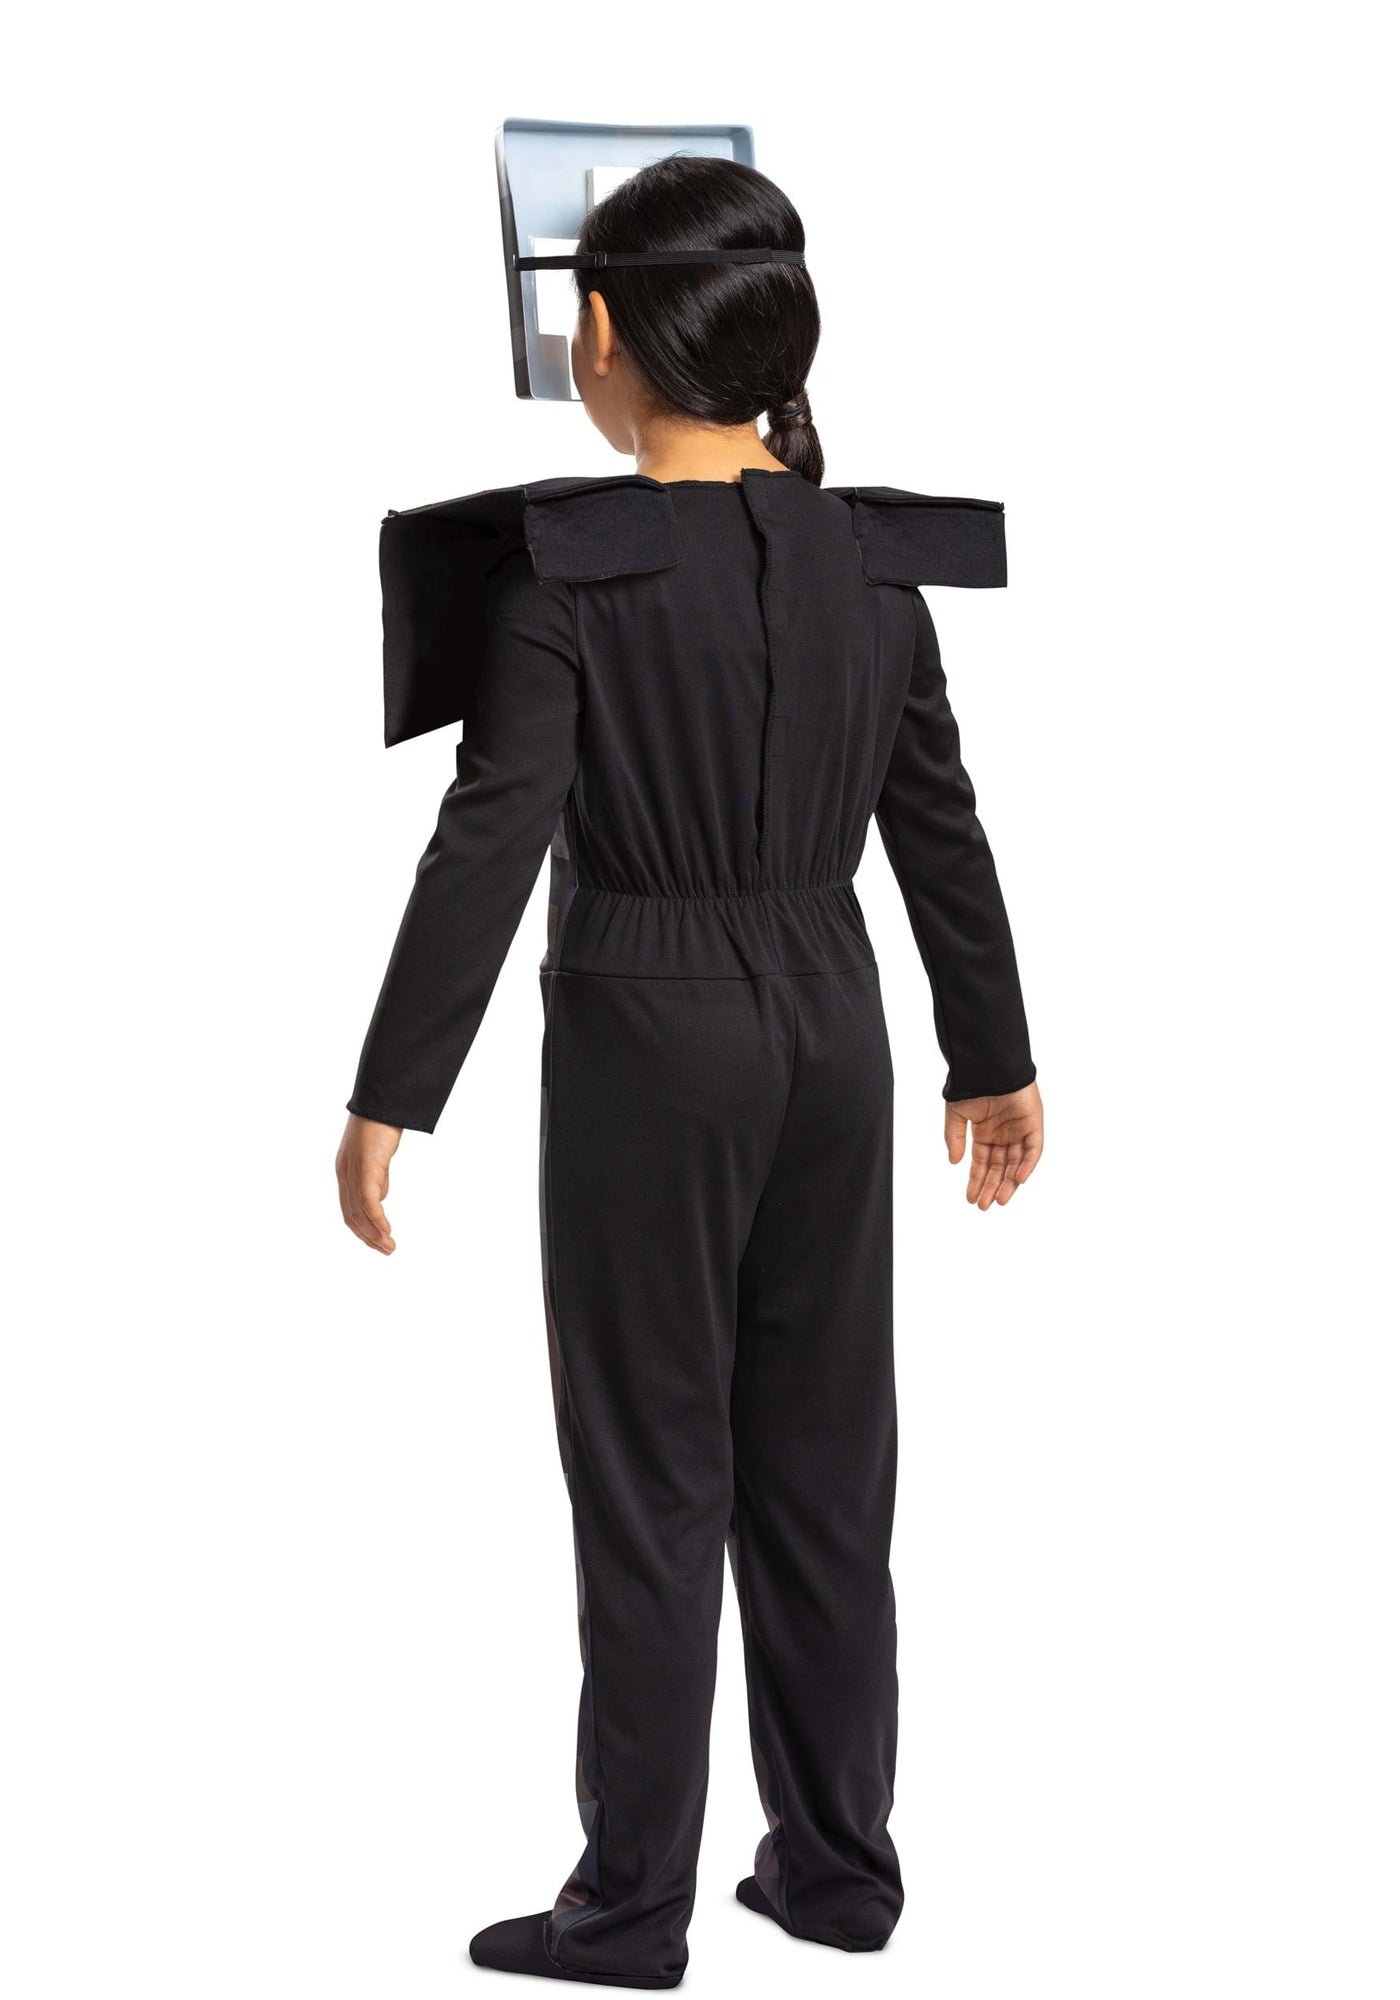 Minecraft Netherite Armor Child Costume